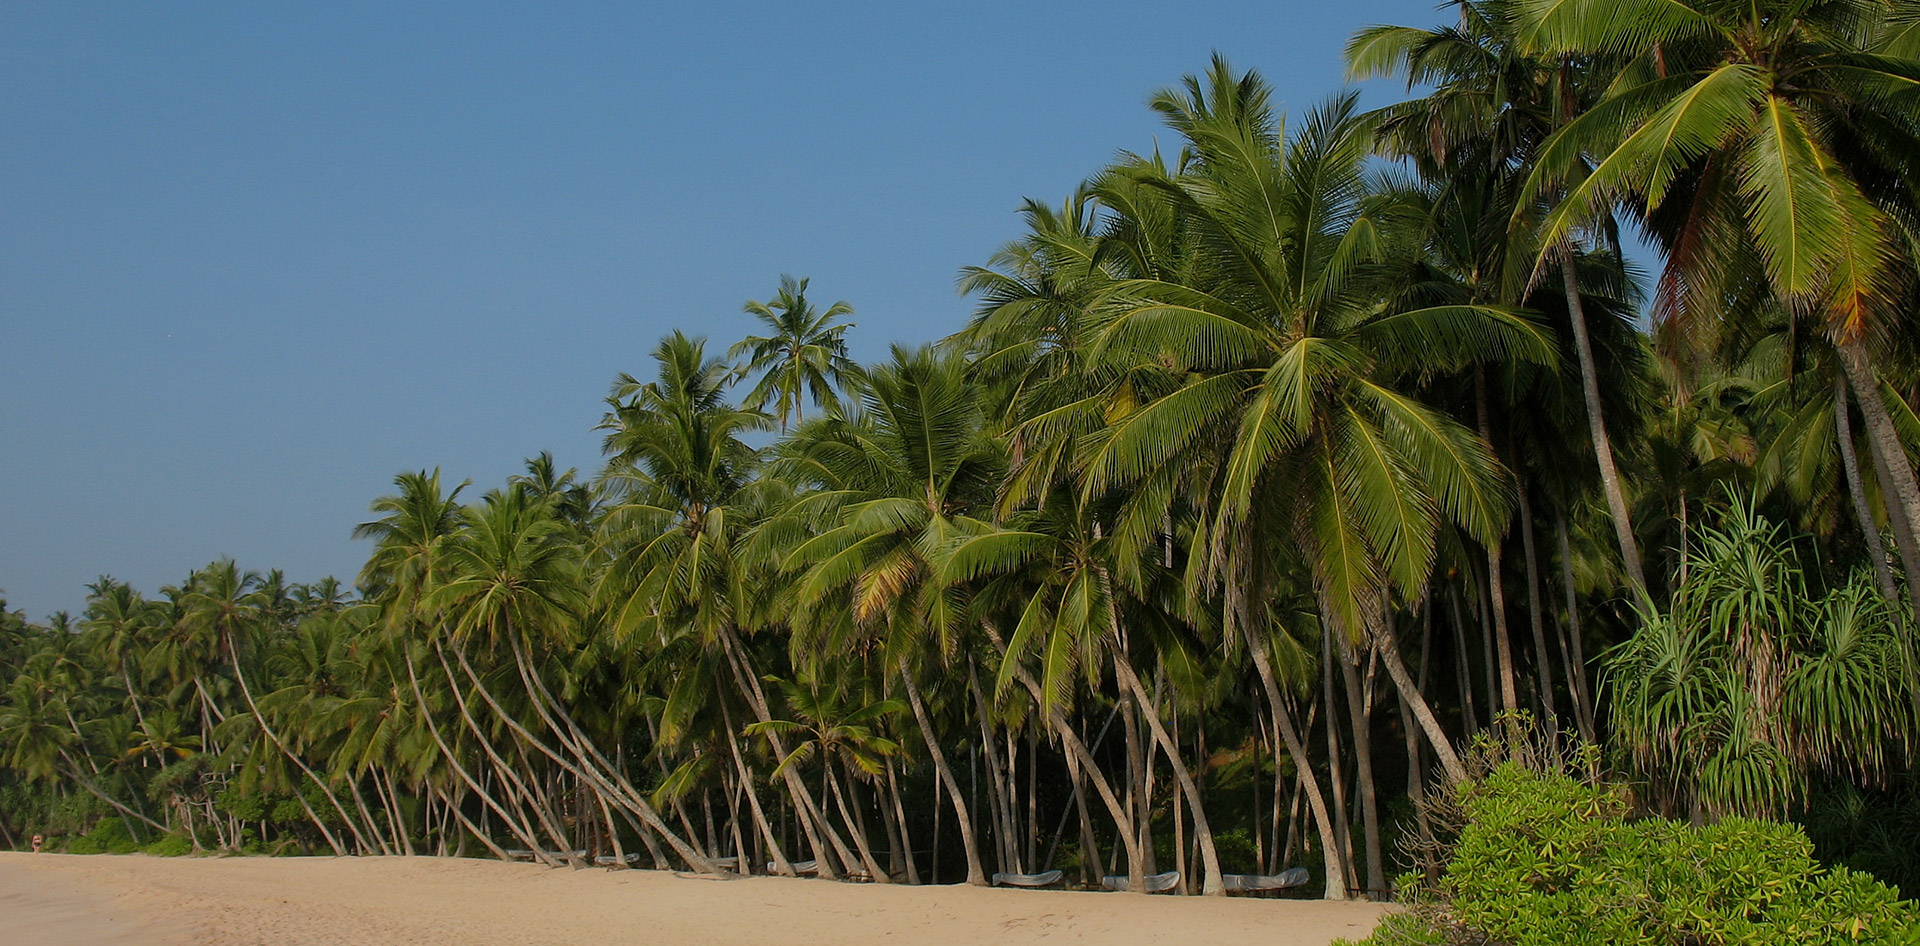 King Coconuts from Sri Lanka